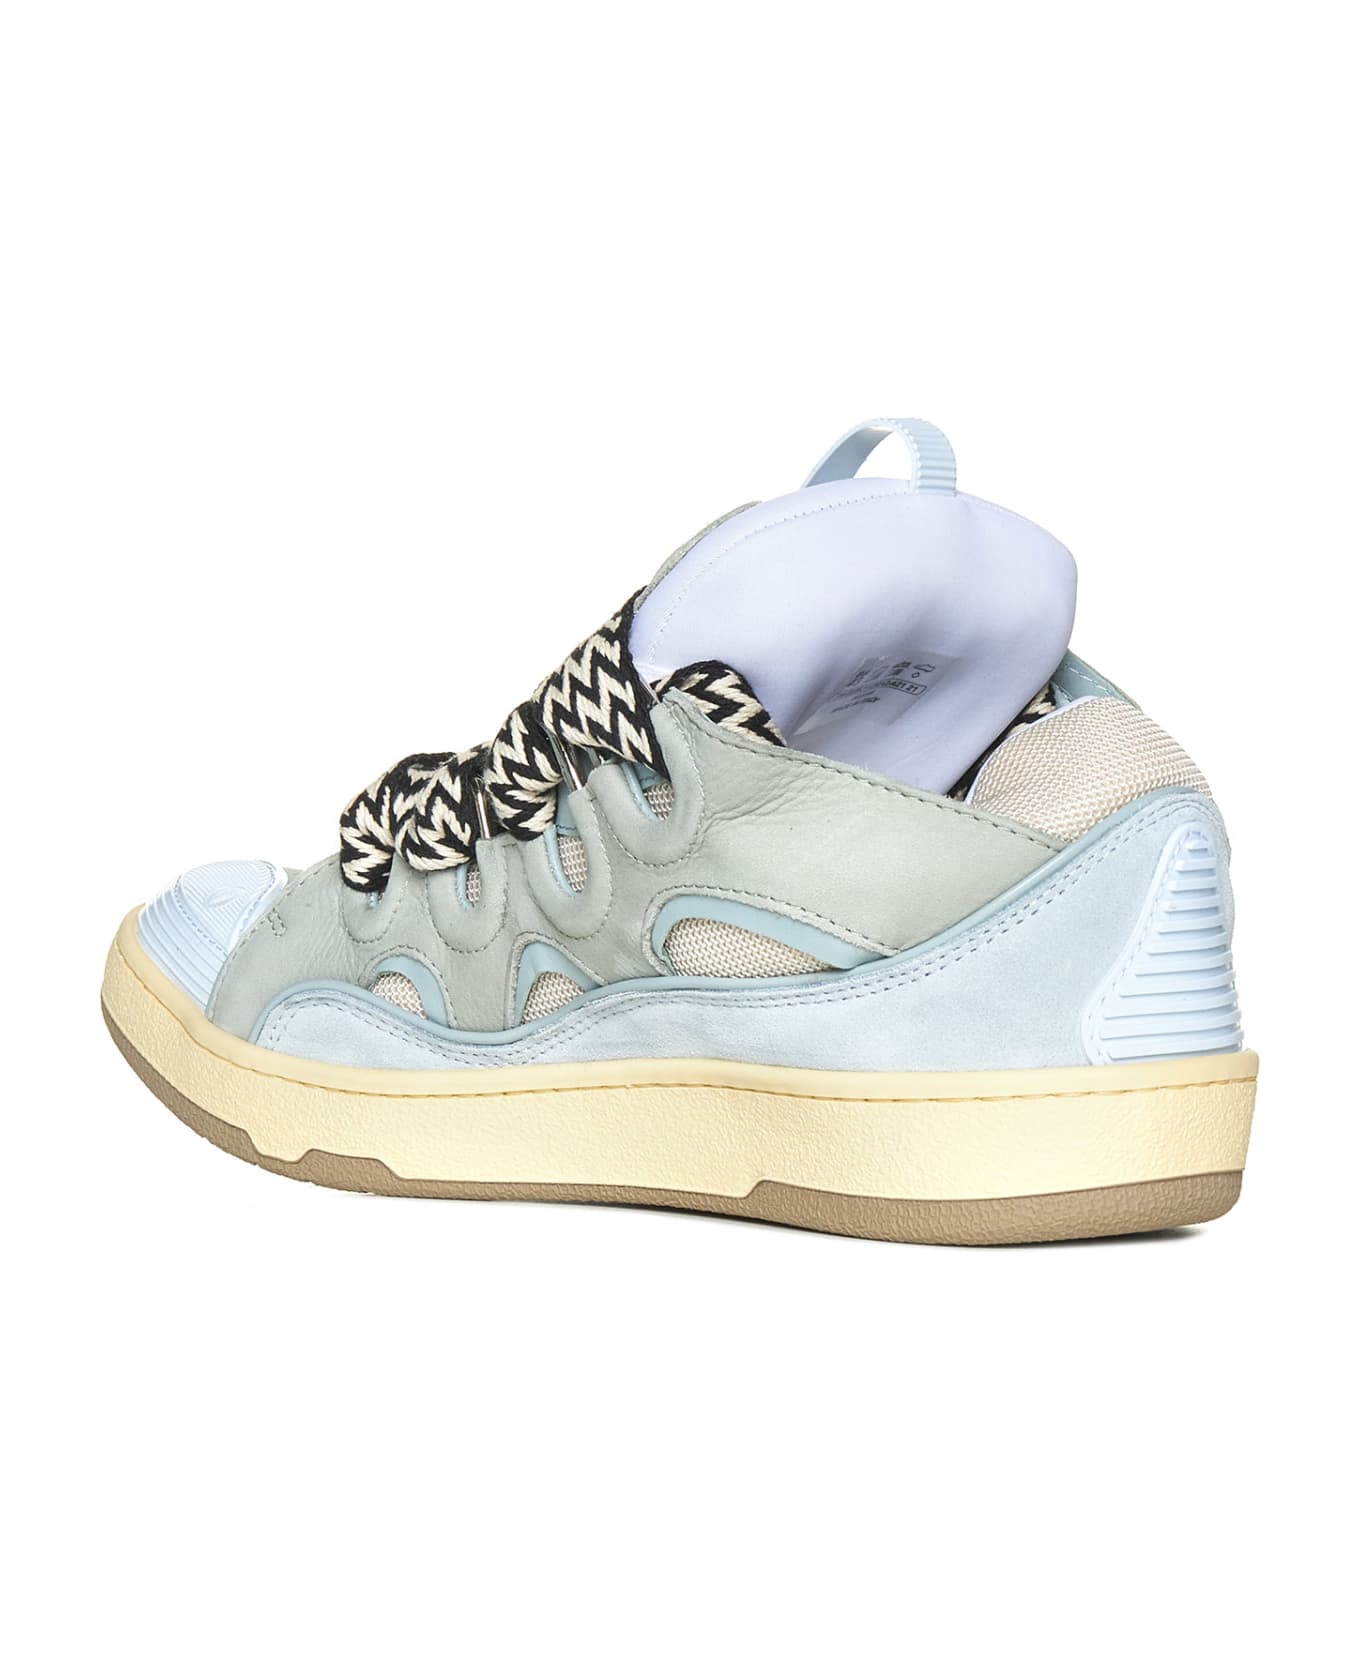 Lanvin Sneakers - Pale blue